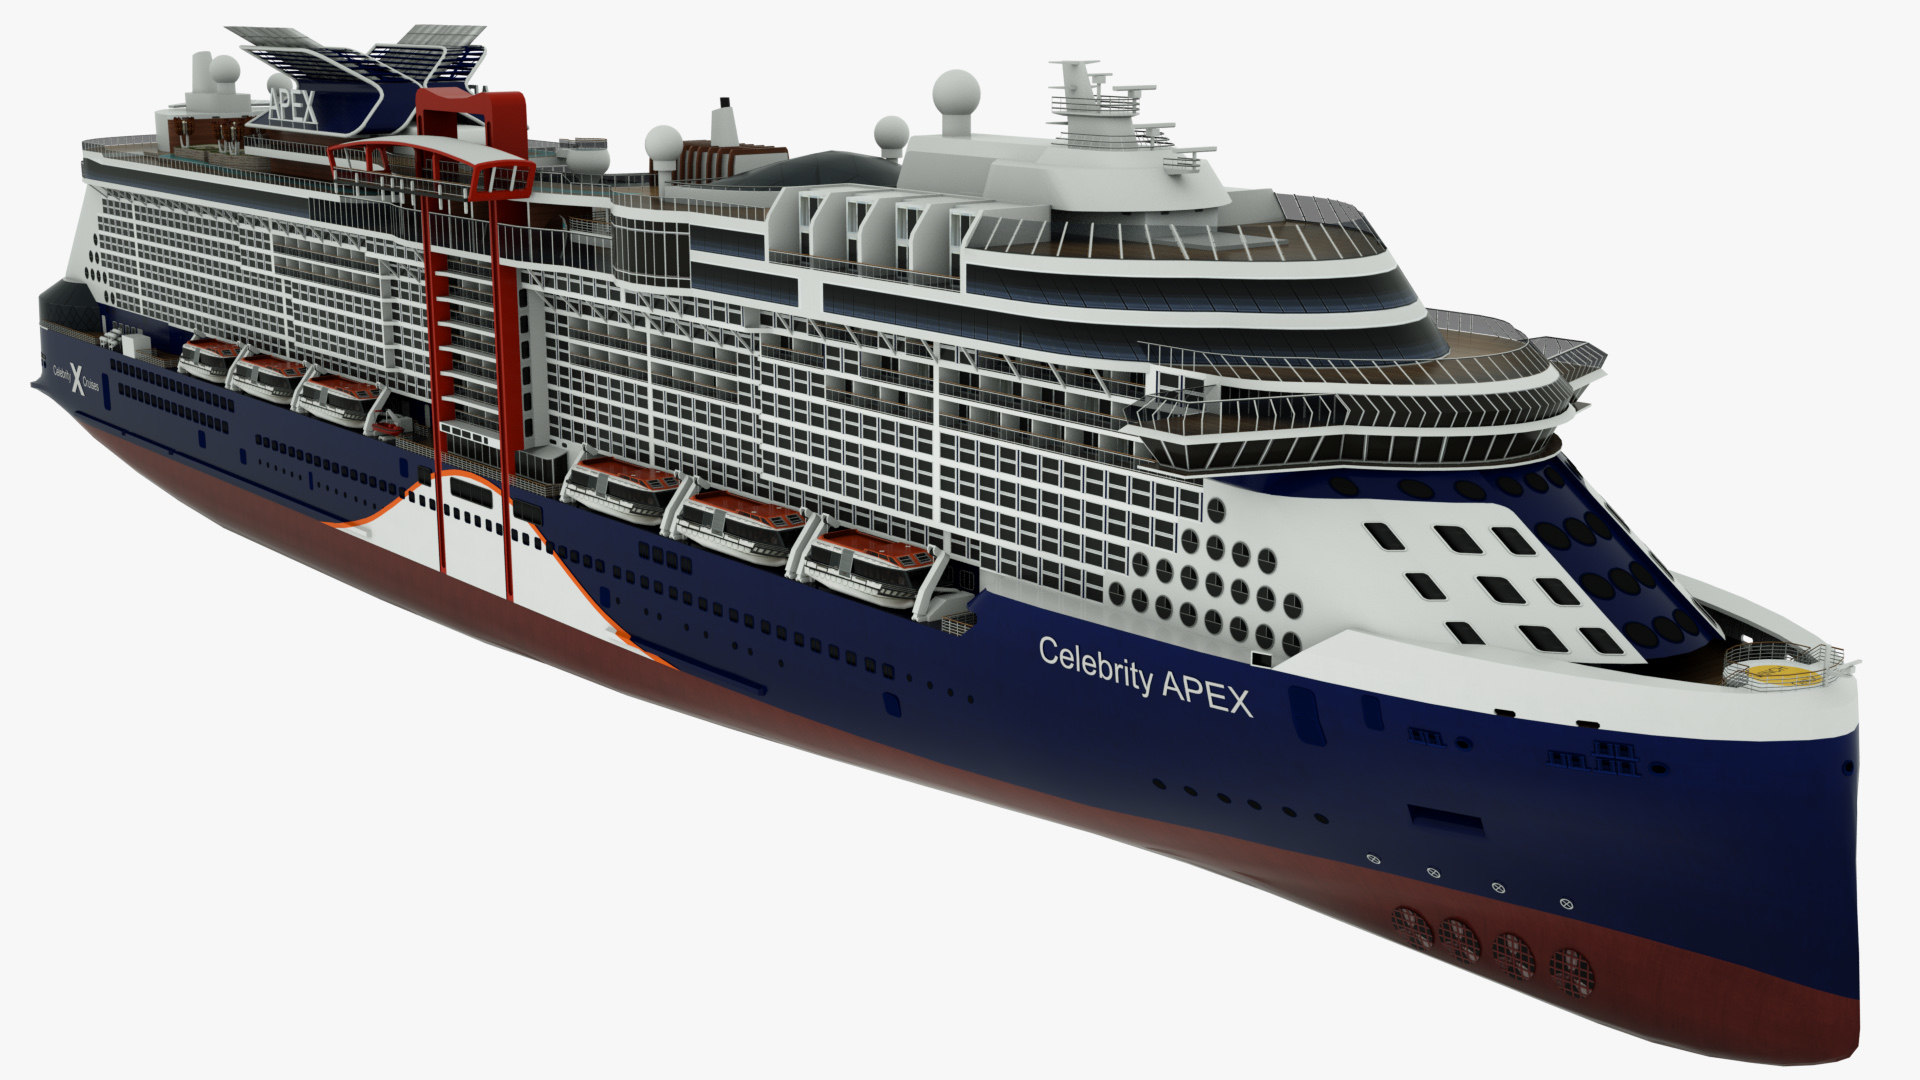 celebrity apex cruise ship model